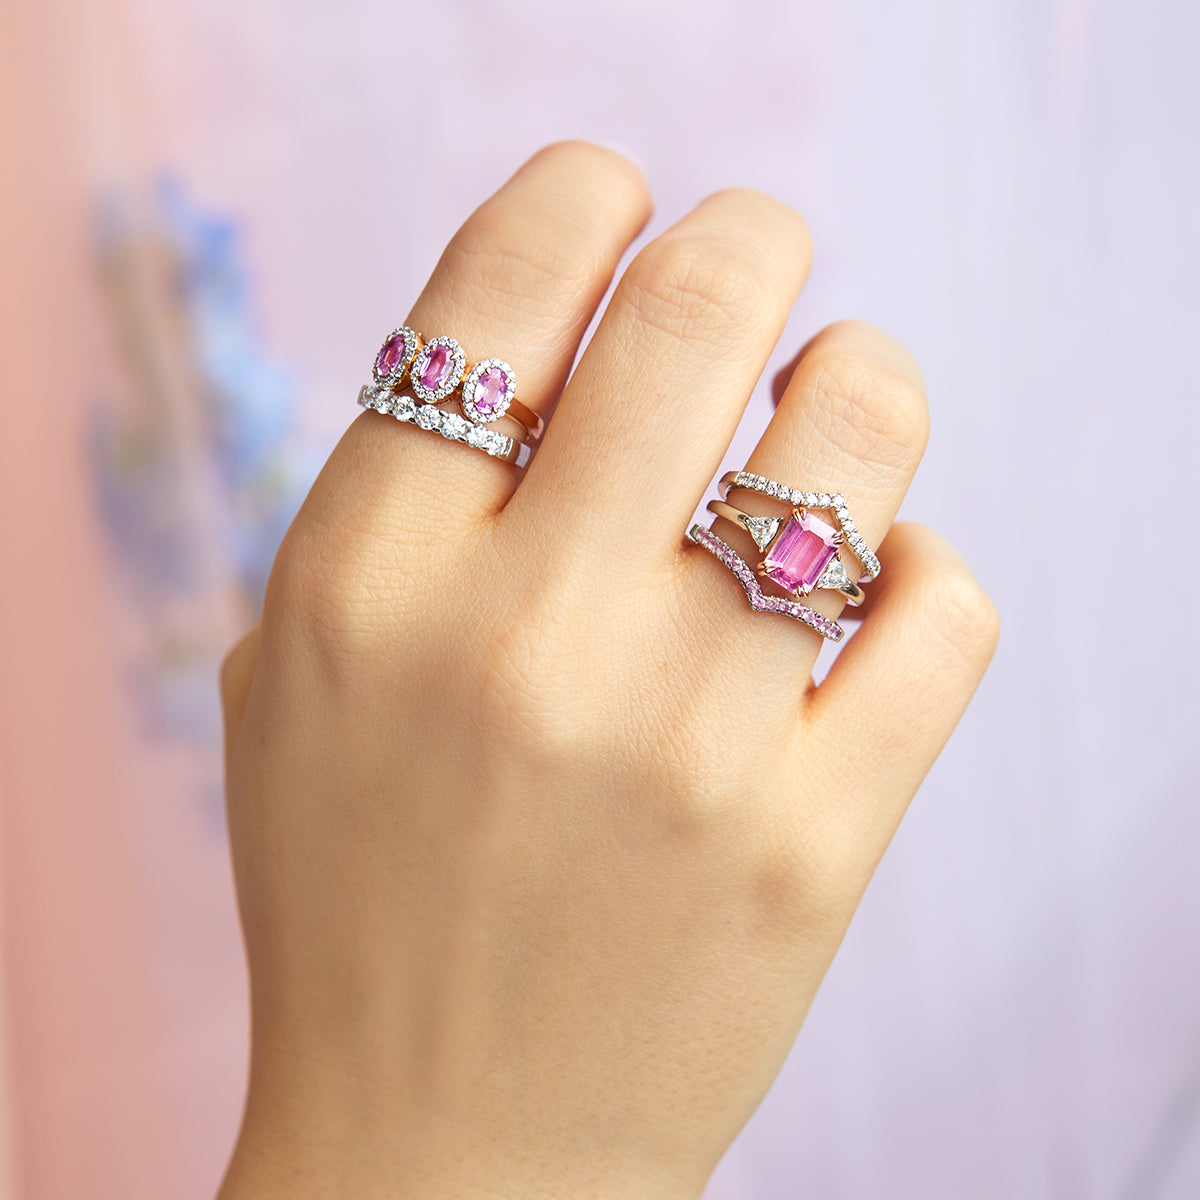 Bailey McKnight's engagement ring | Wedding rings engagement, Dream engagement  rings, Dream wedding ring